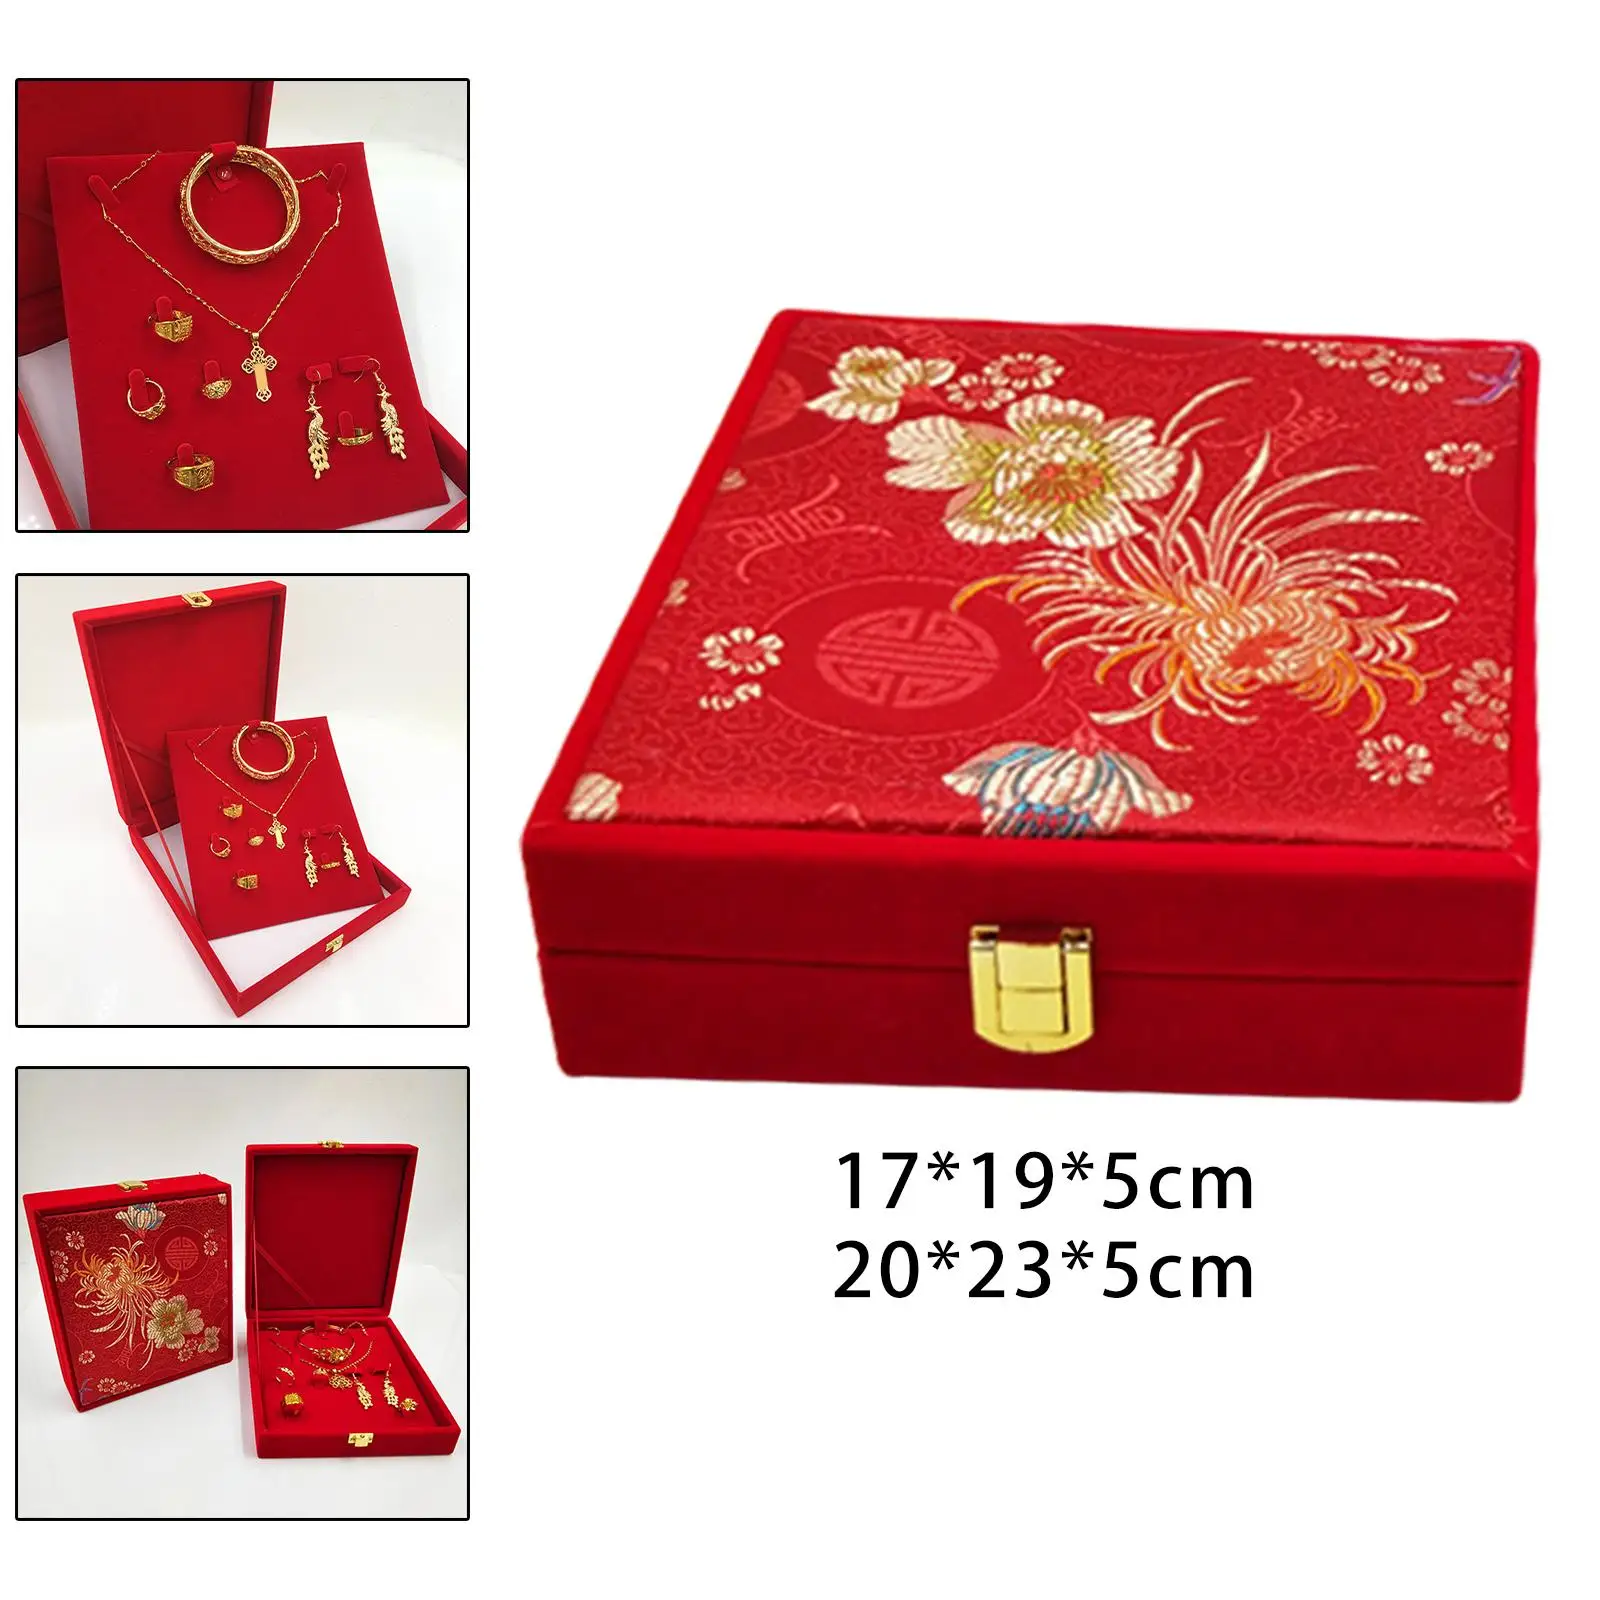 Multifunctional Jewelry Display Box Earrings Bracelet Rings Chinese Style Red Velvet Storage Case Gift Box Organizer for Wedding